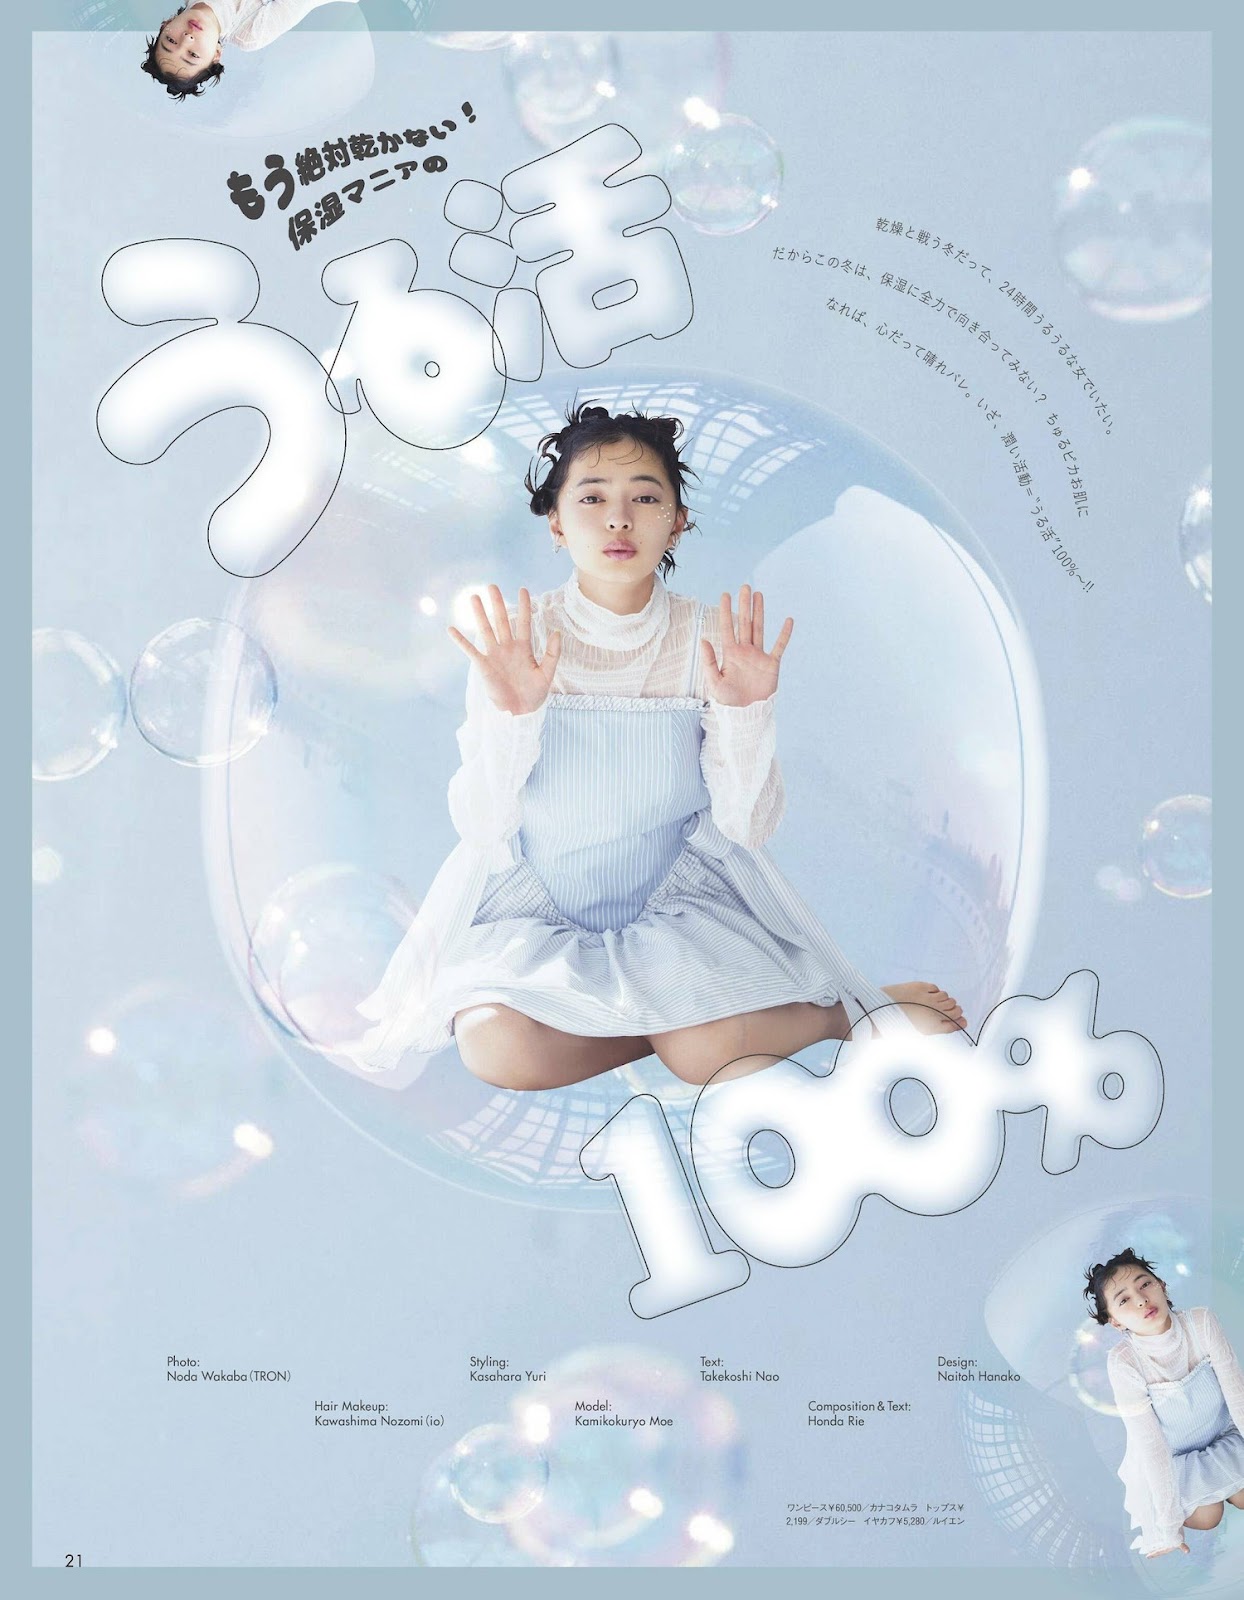 Kamikokuryo Moe 上國料萌衣, aR (アール) Magazine 2023.02 img 2